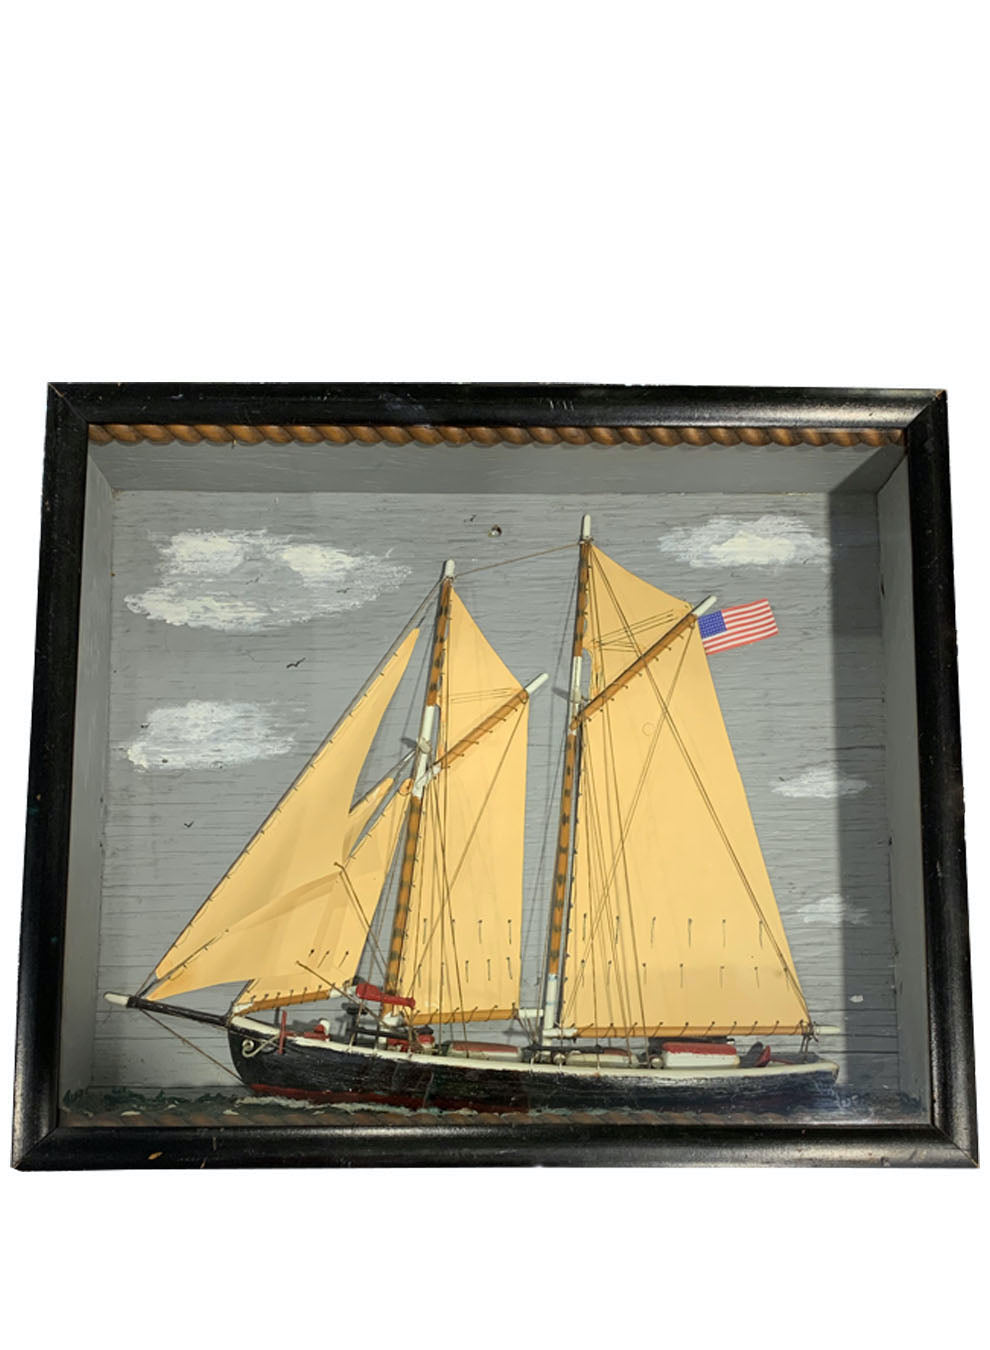 MID TO LATE 19TH CENTURY AMERICAN SHIP DIORAMA - Home - Libertine